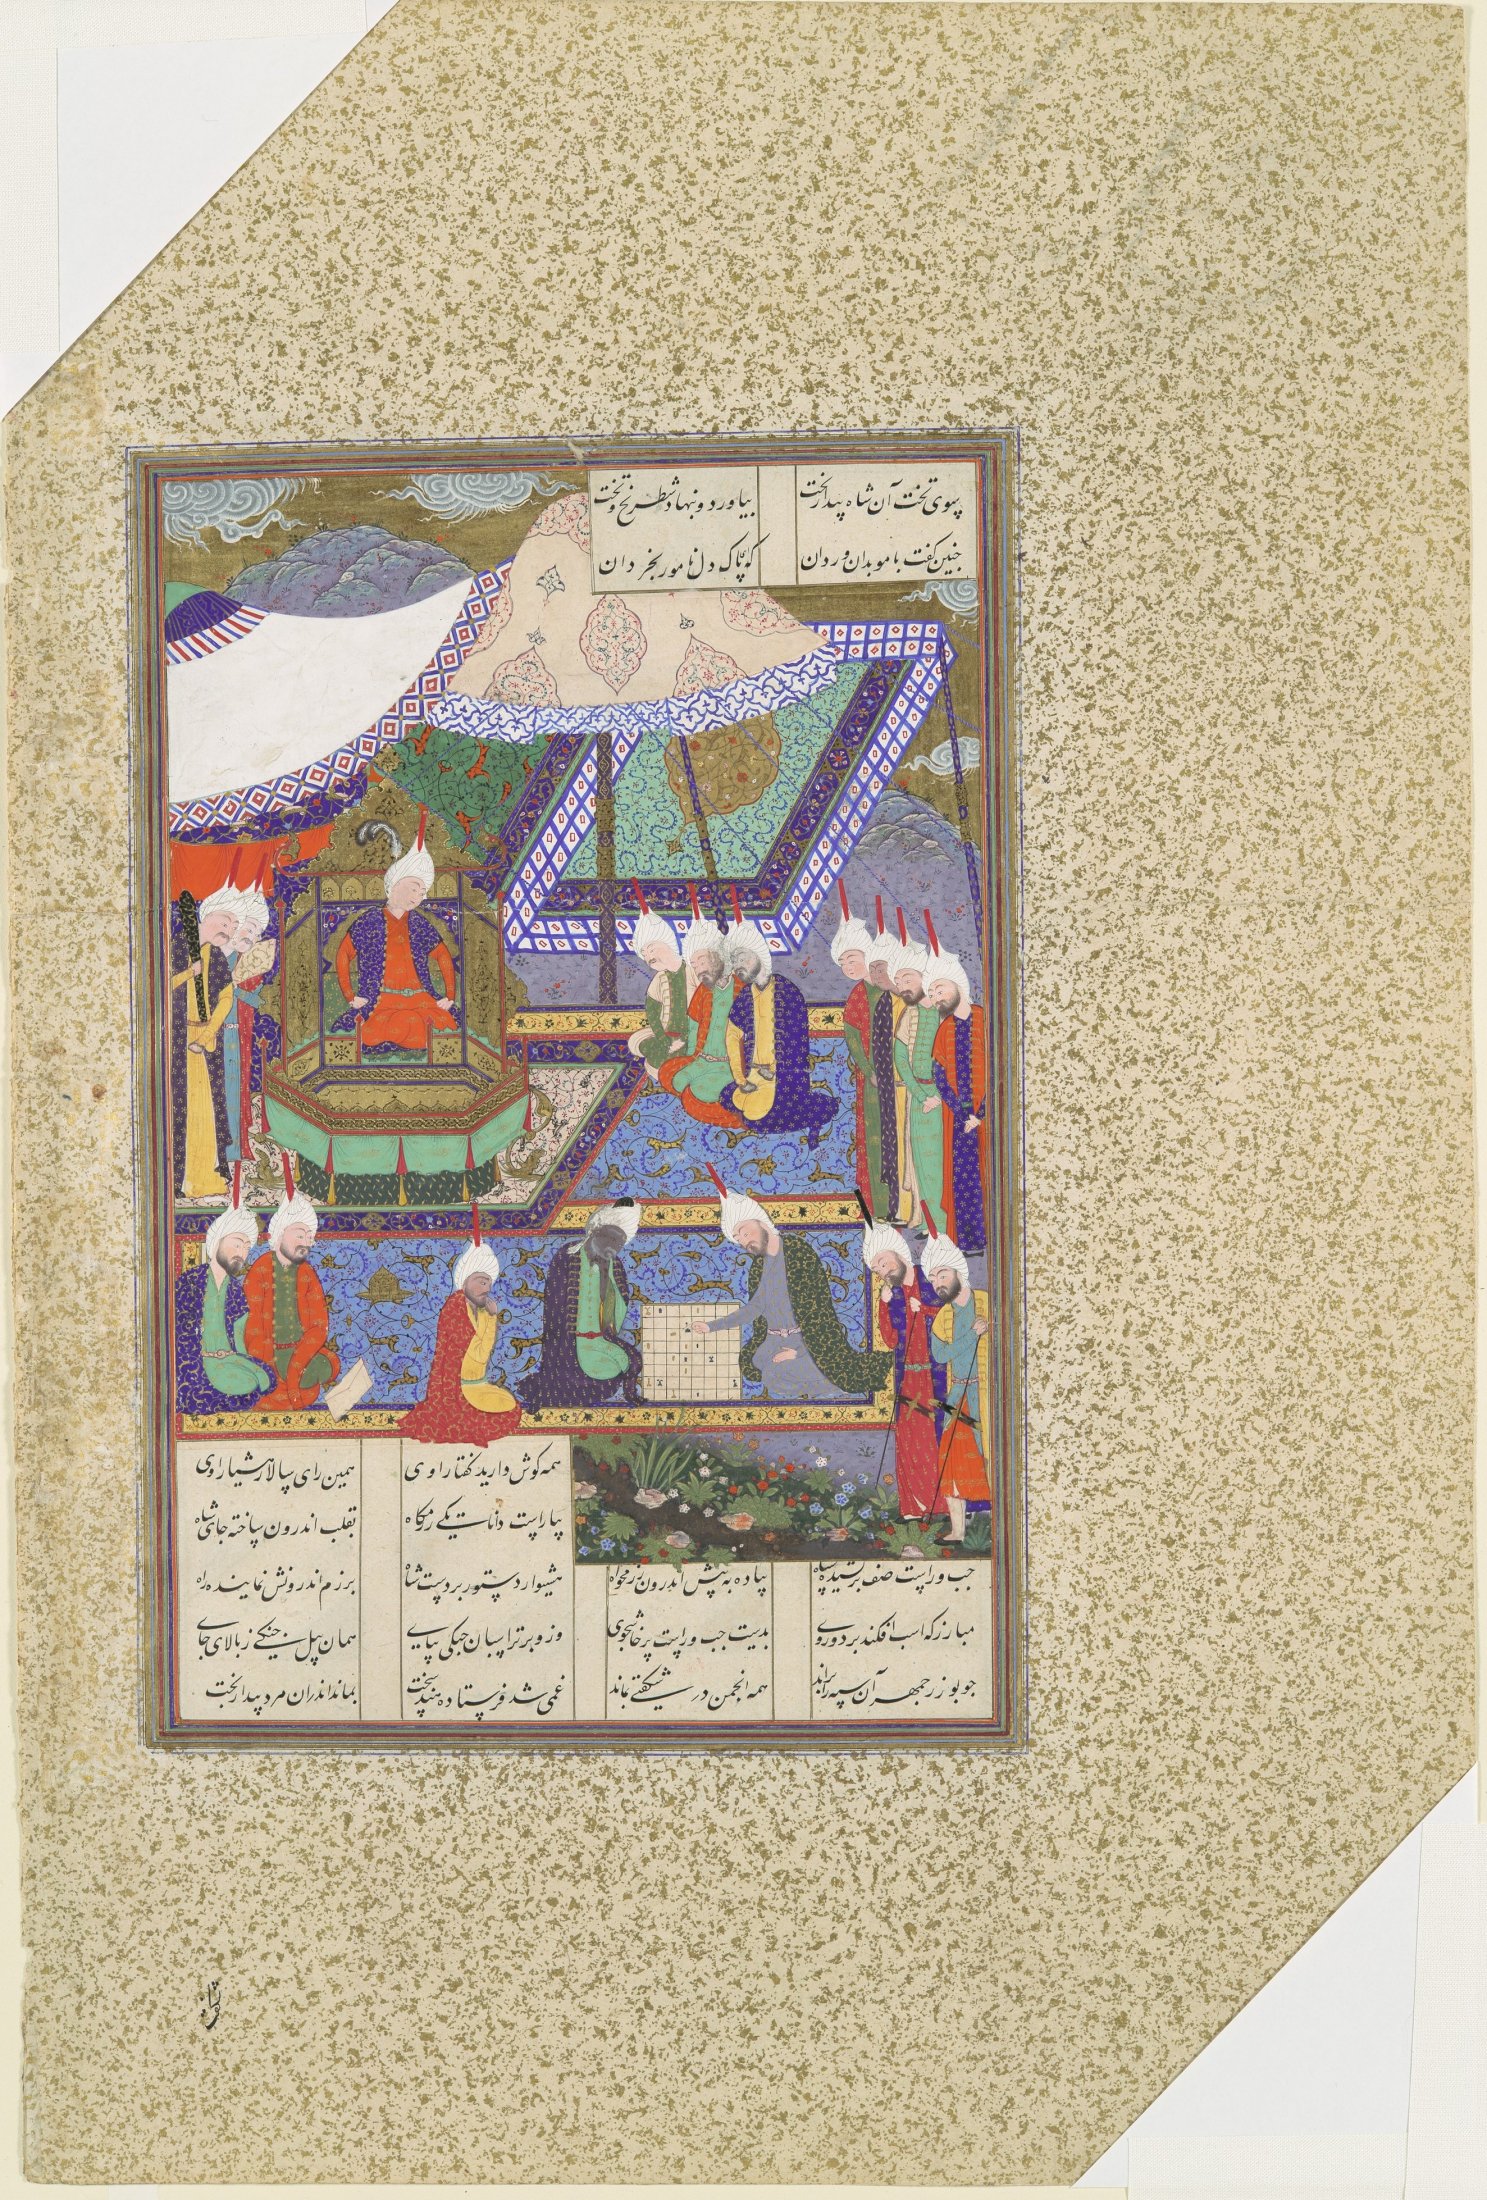  Buzurjmihr Masters The Hindu Game Of Chess , Folio 639v From The Shahnama (Book Of Kings) Of Shah Tahmasp MET DP105221